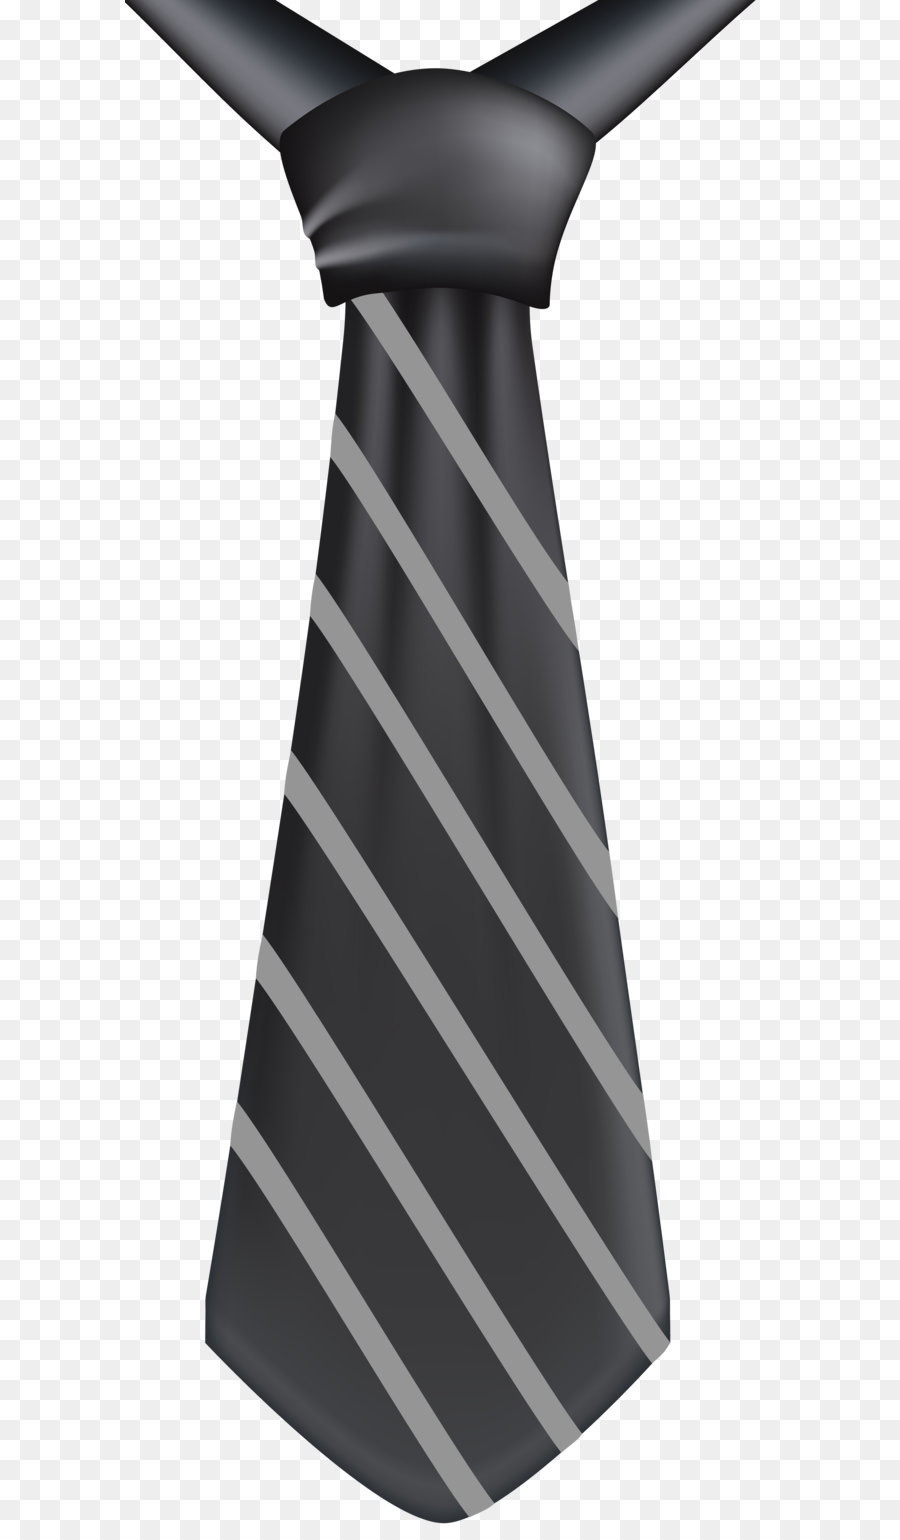 Necktie Clip art - Tie PNG Clip Art Image png download - 3404*8000 - Free Transparent Necktie png Download.